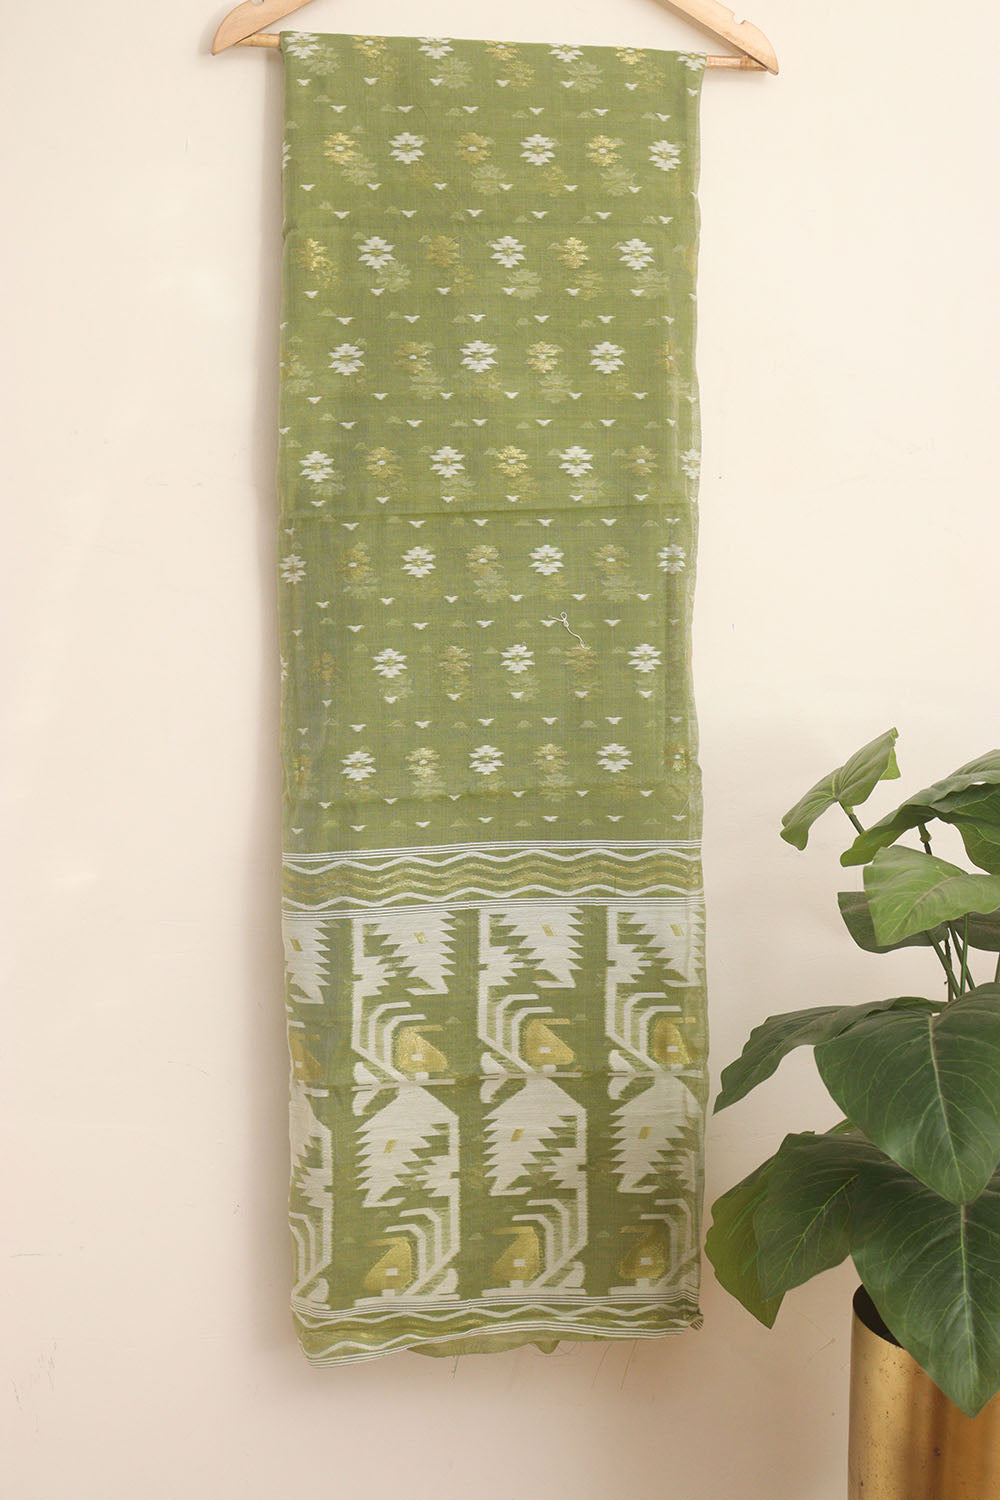 Green Jamdani Cotton Silk Two Piece Unstitched Suit Set - Luxurion World